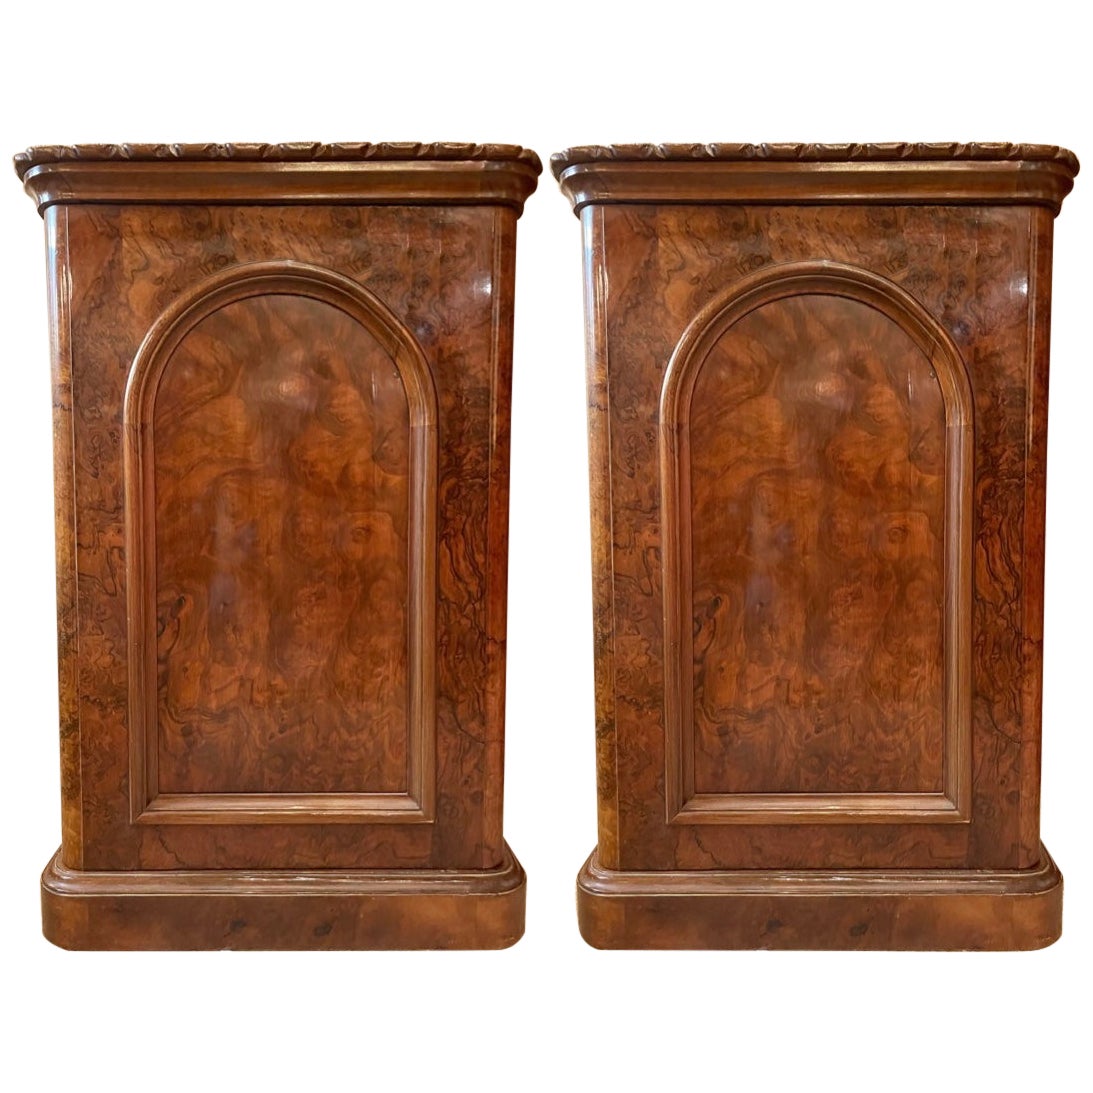 Pair Antique English Victorian Burled Walnut Side Tables, circa 1870